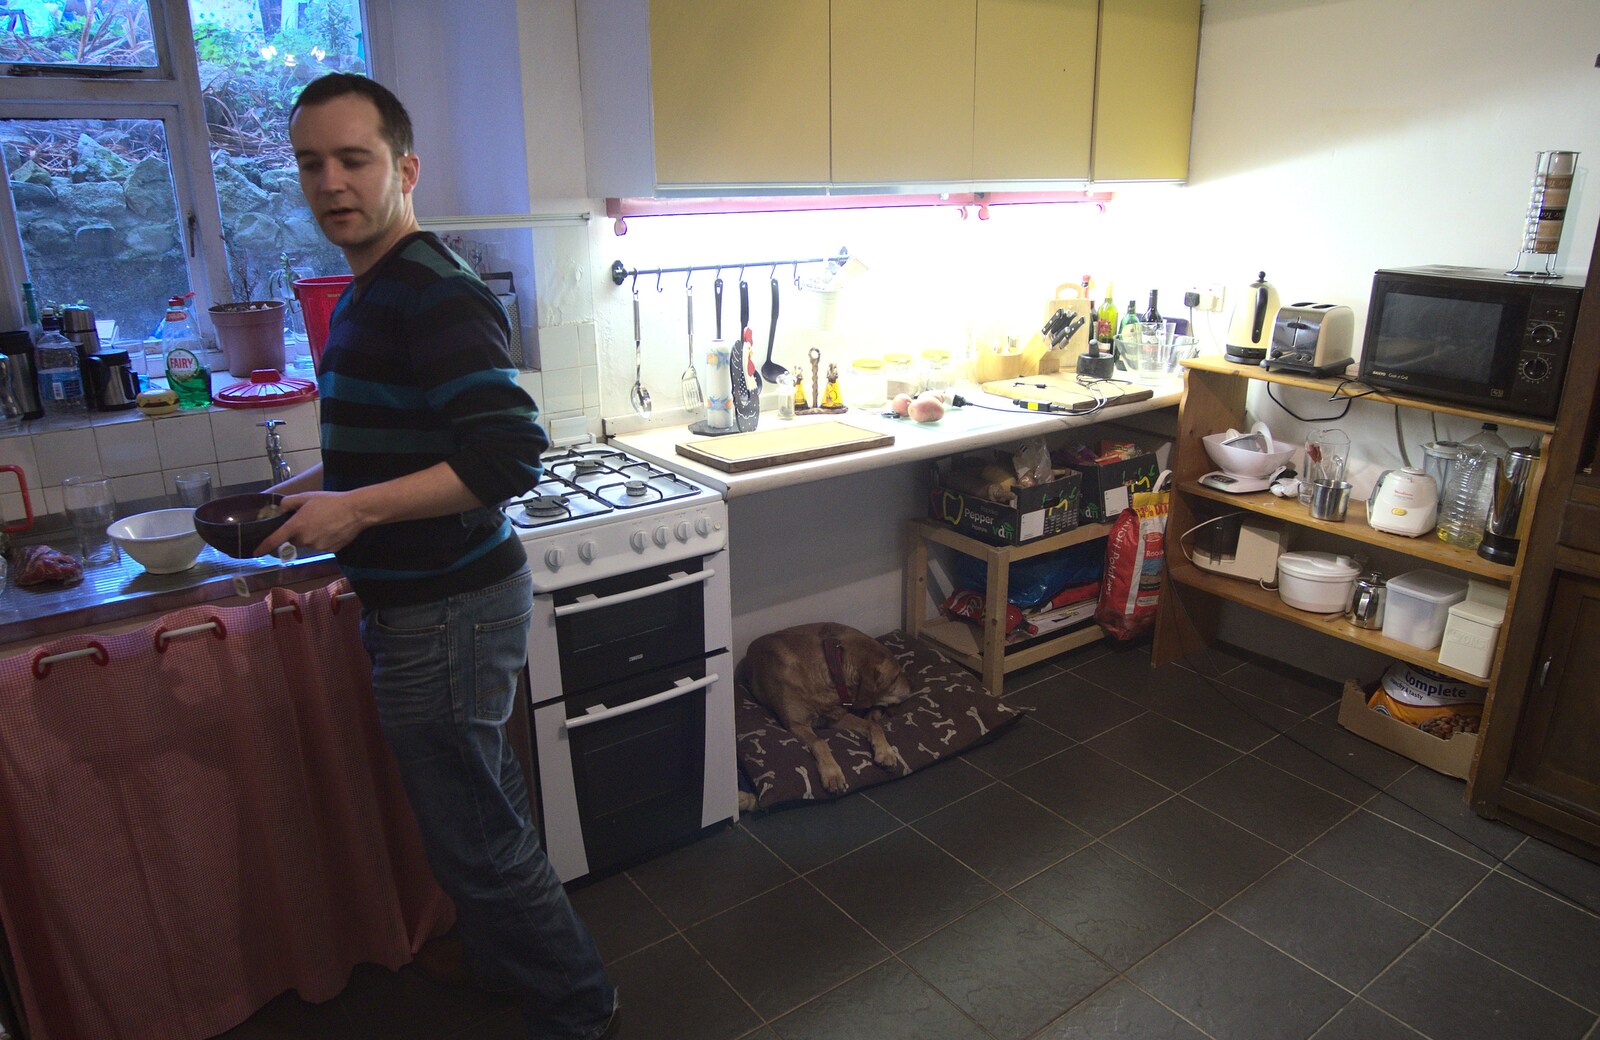 A Day in Dublin, Ireland - 7th January 2012: Jamie roams around the kitchen